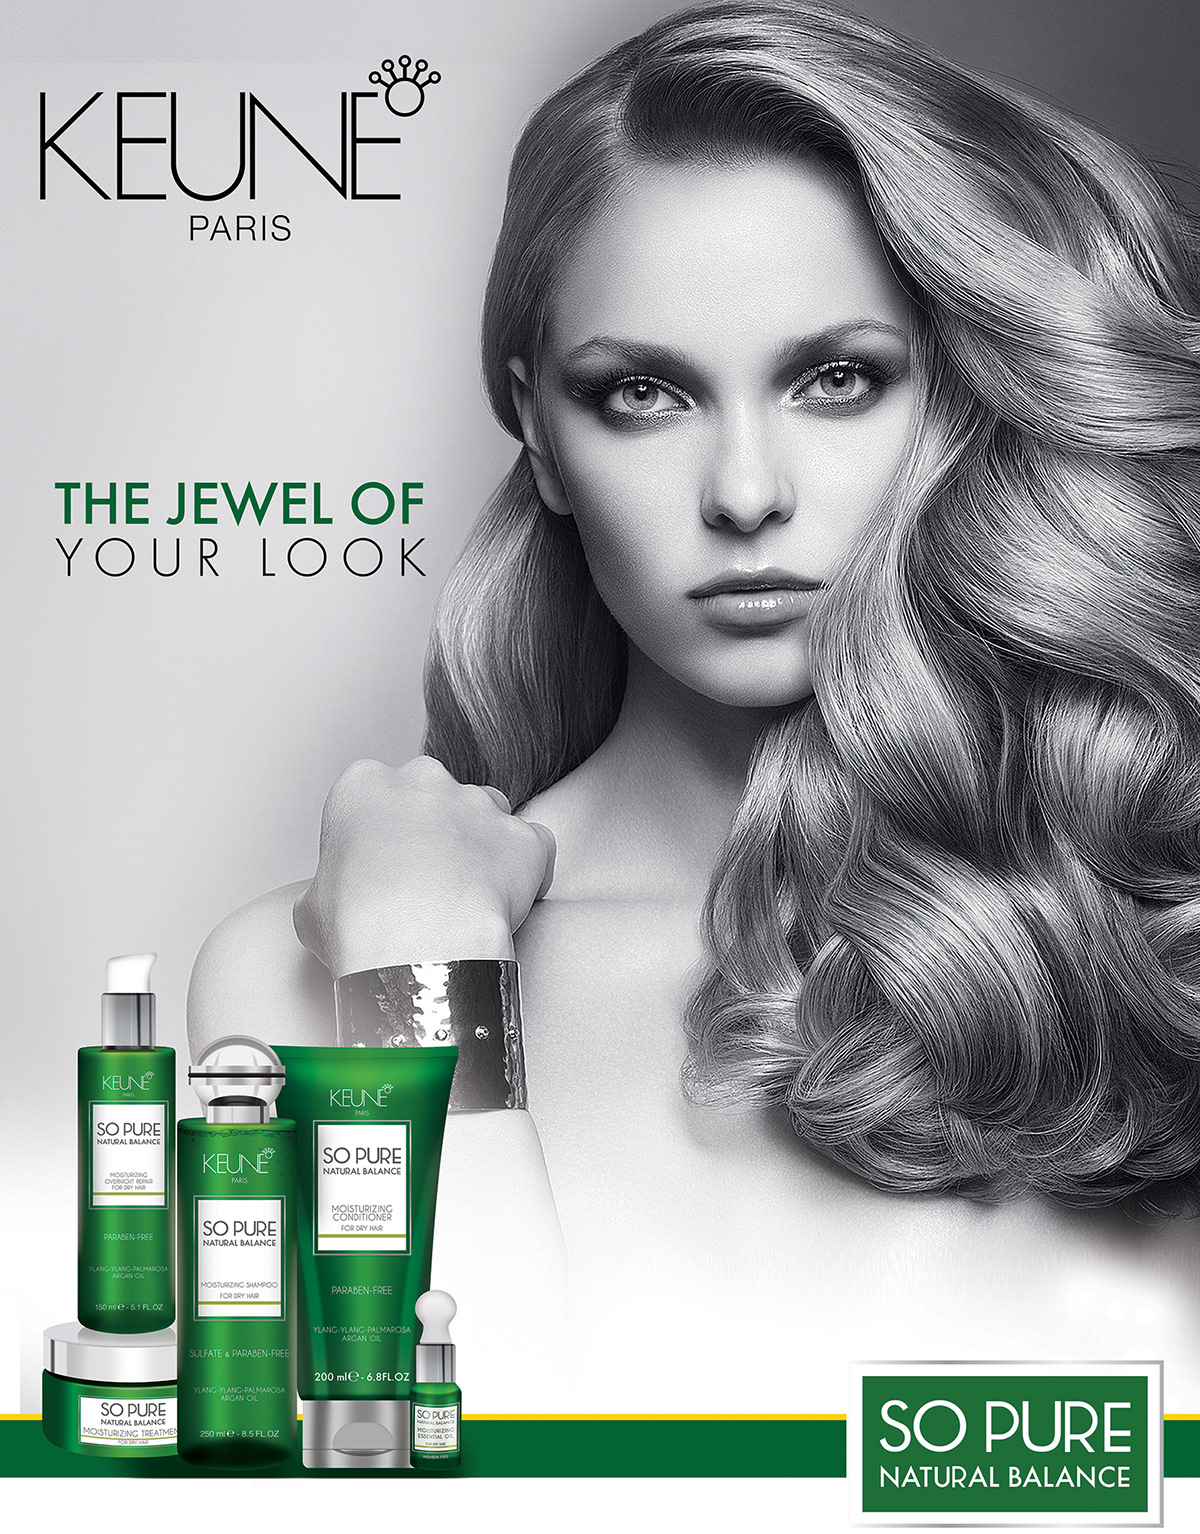 Keune Magazine ads on Behance